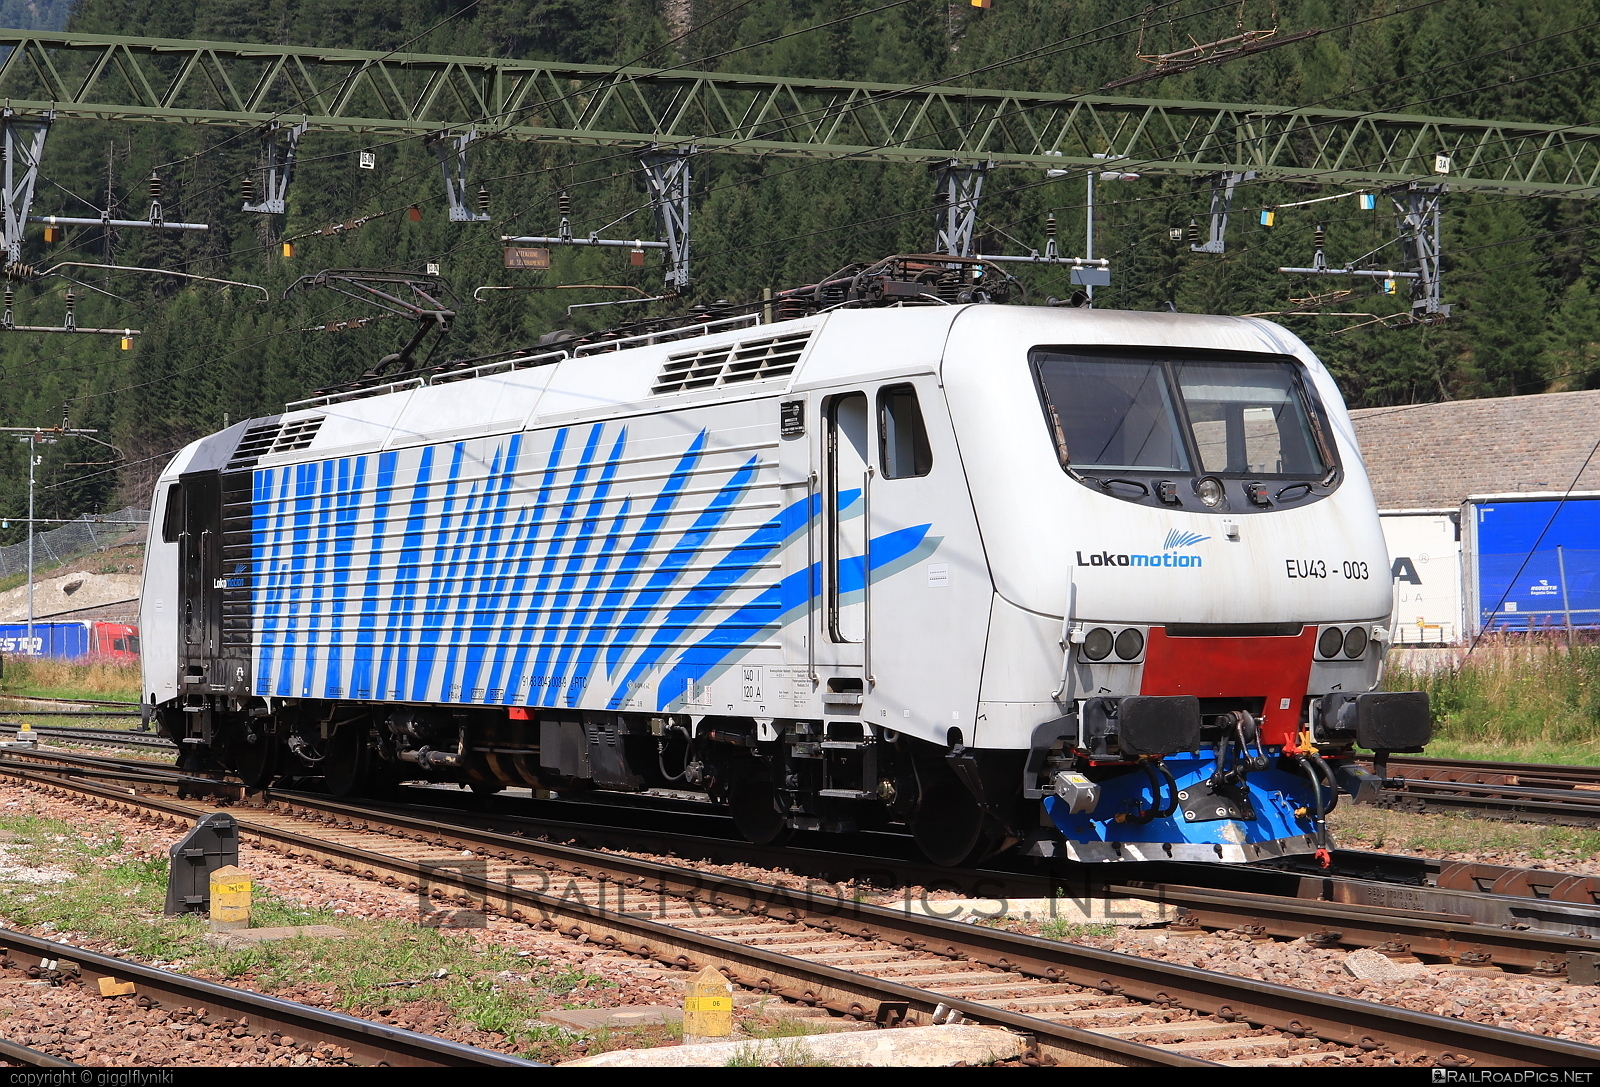 FS Class E.412 - EU43-003 operated by Lokomotion Gesellschaft für Schienentraktion mbH #LokomotionGesellschaftFurSchienentraktion #RailTractionCompany #e412 #fsClassE412 #lokomotion #rtc